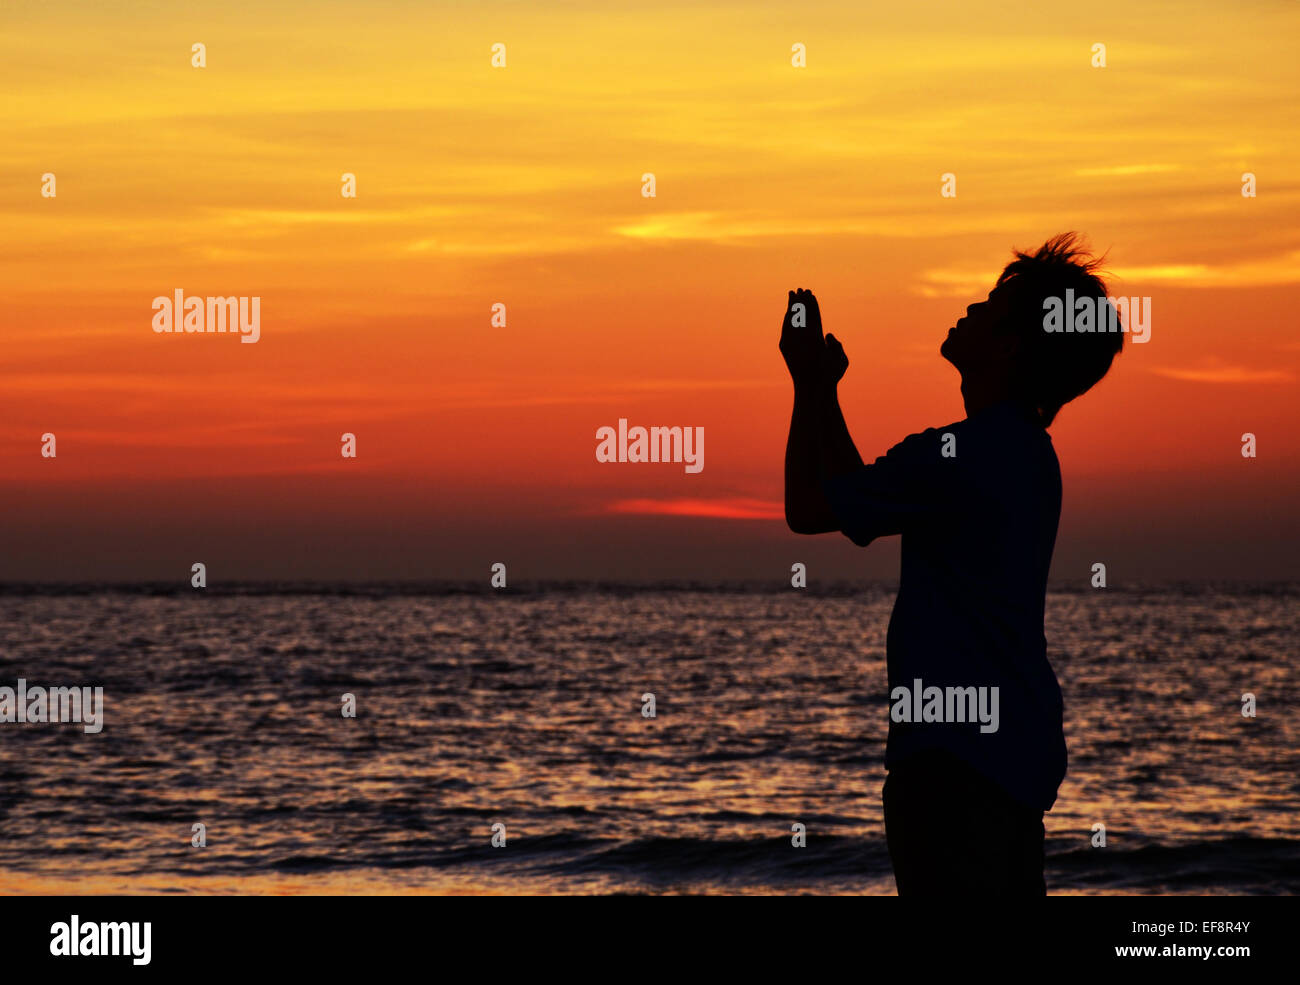 Malaysia, Sabah, Tuaran, Praying man silhouetted against sunset sky over sea Stock Photo